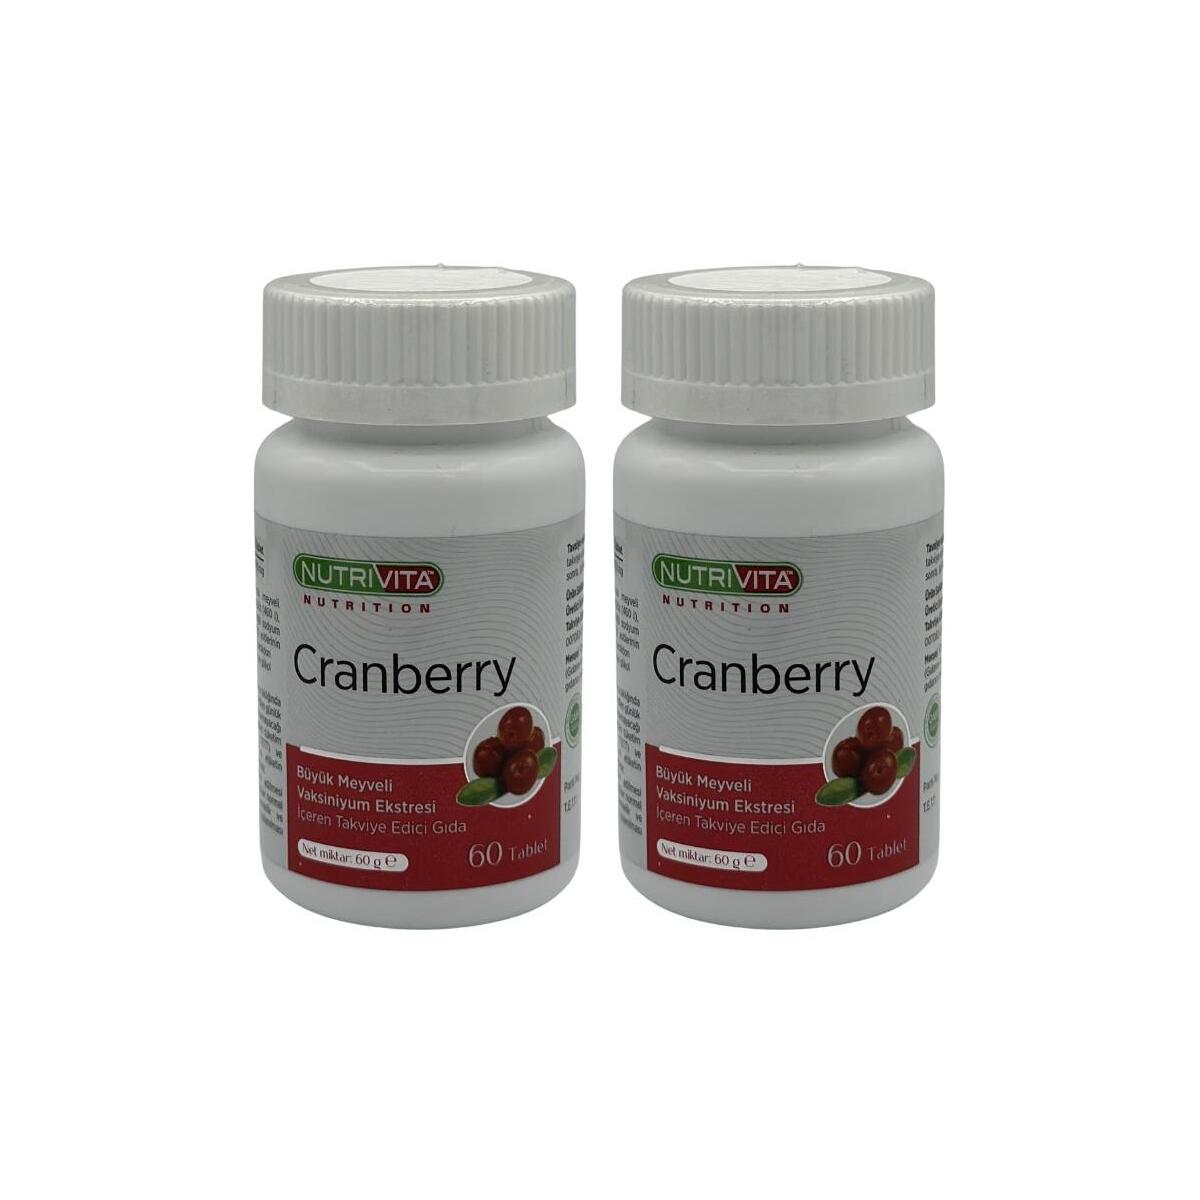 Nutrivita Nutrition Cranberry 500 Mg 2X60 Tablet Büyük Meyveli Vaksiniyum